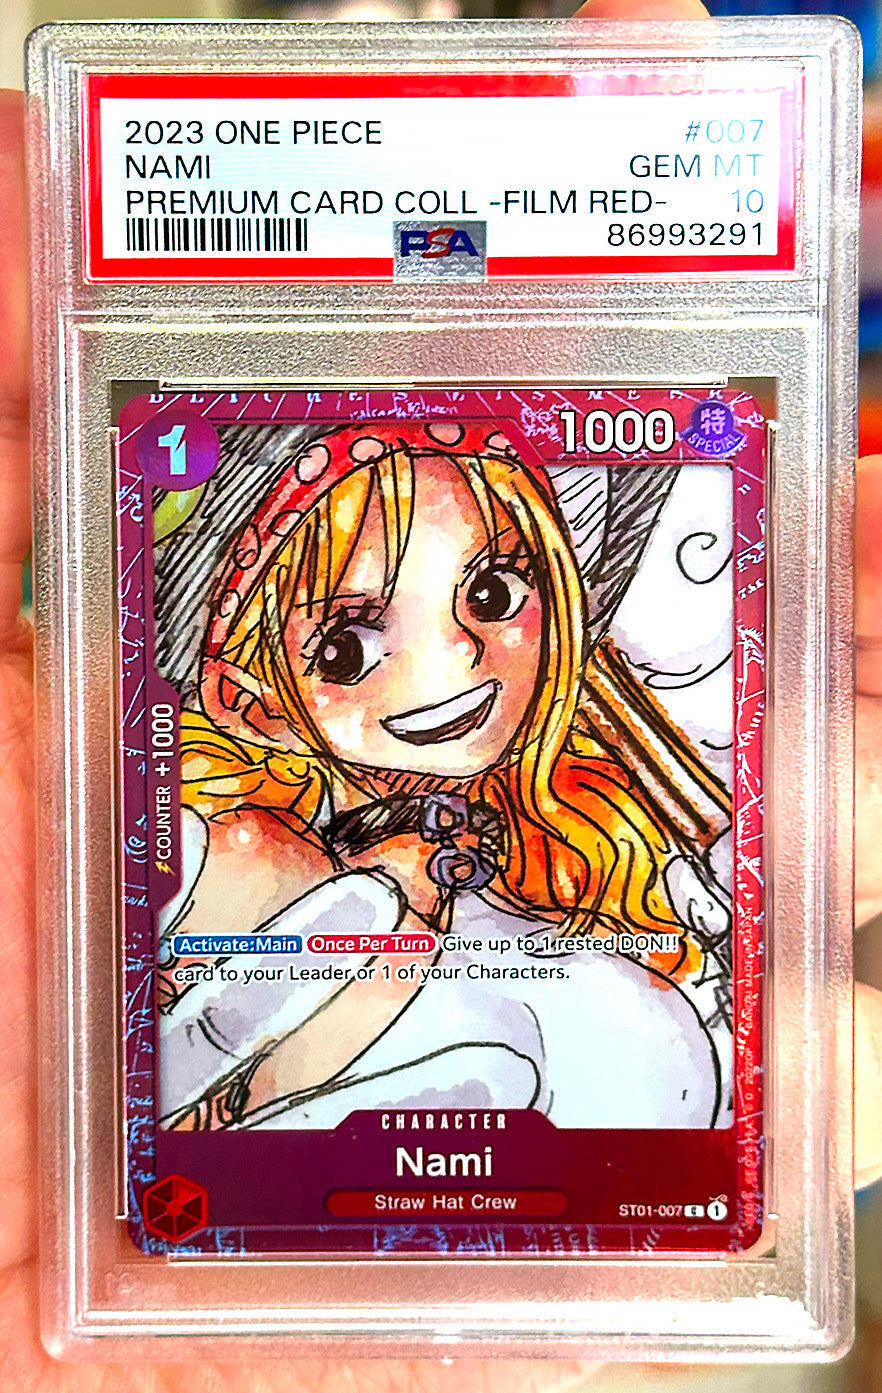 Nami - Alternate Art - Premium Card Collection - ST01-013 - PSA 10